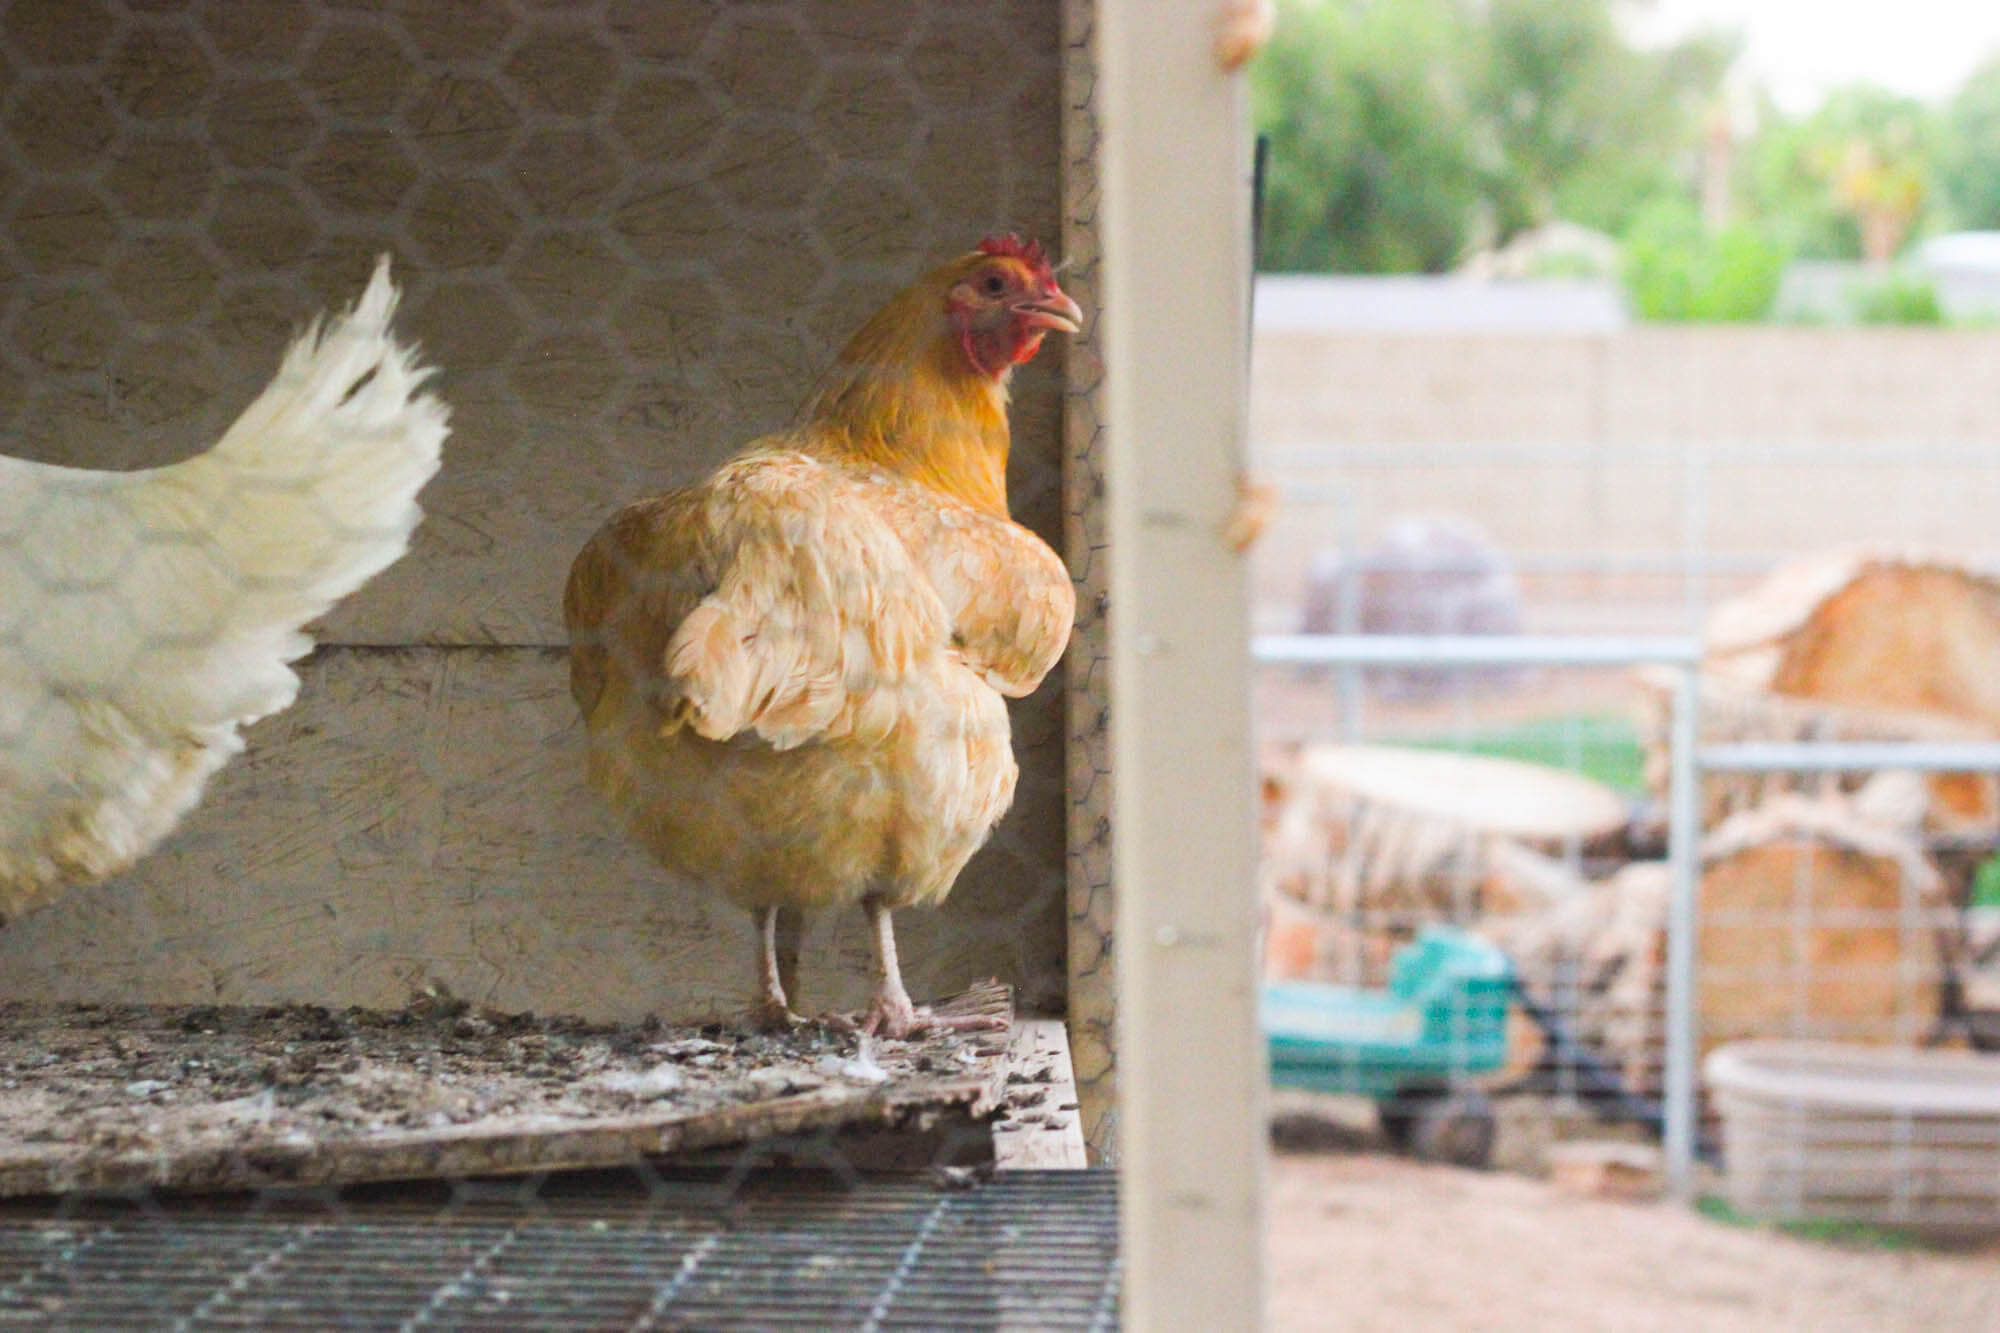 Urban farming - Chickens